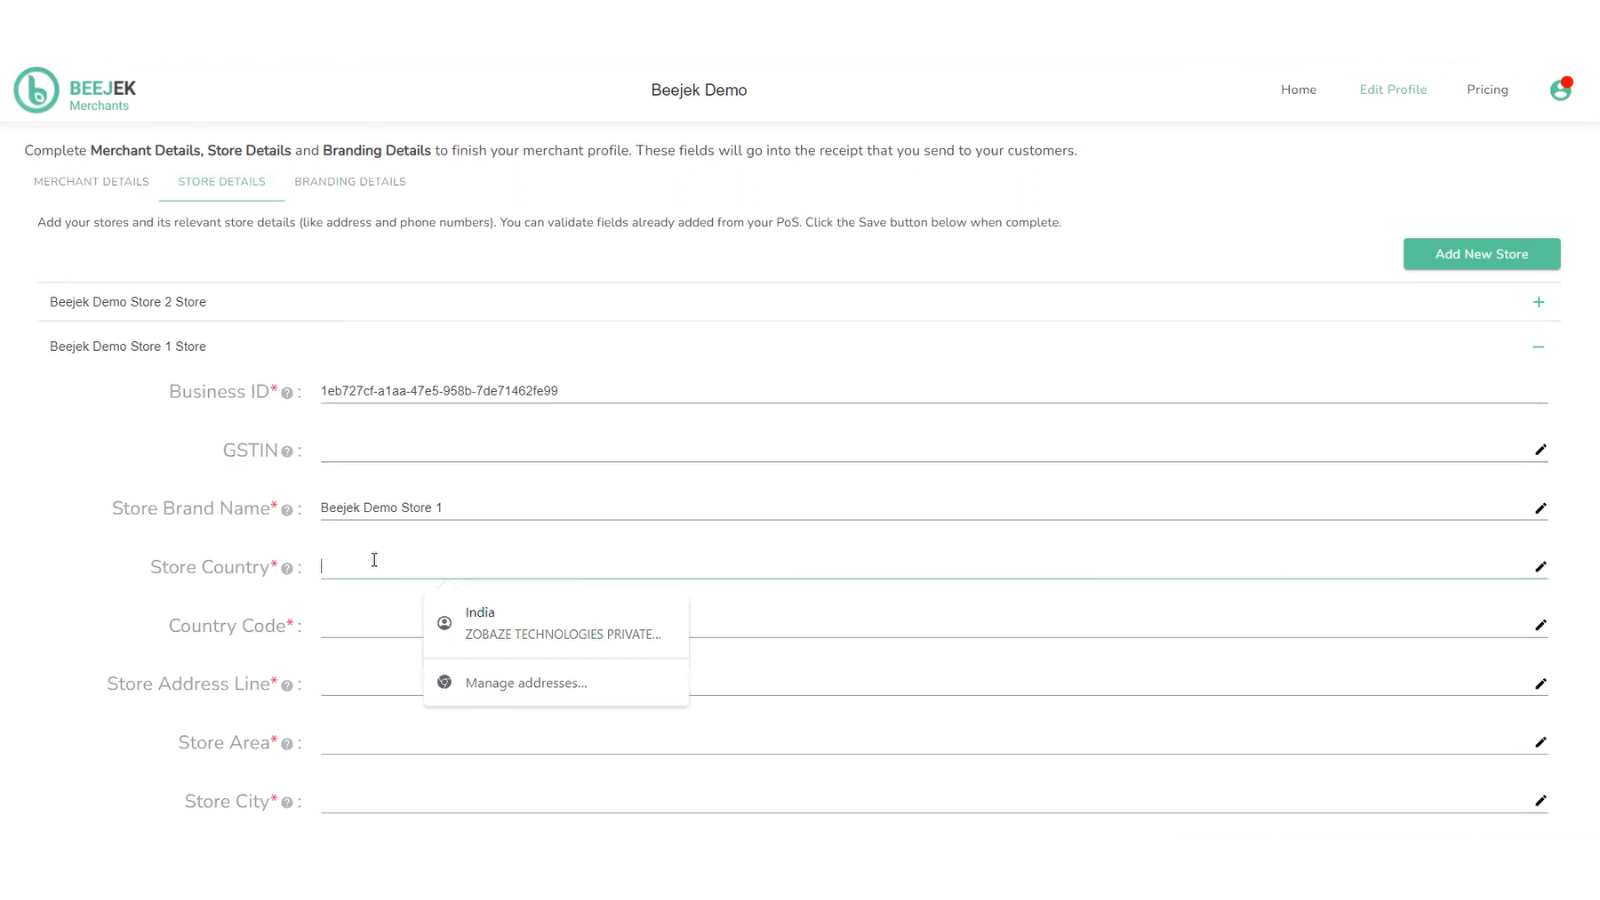 Step 3 - Update Merchant Profile on Beejek